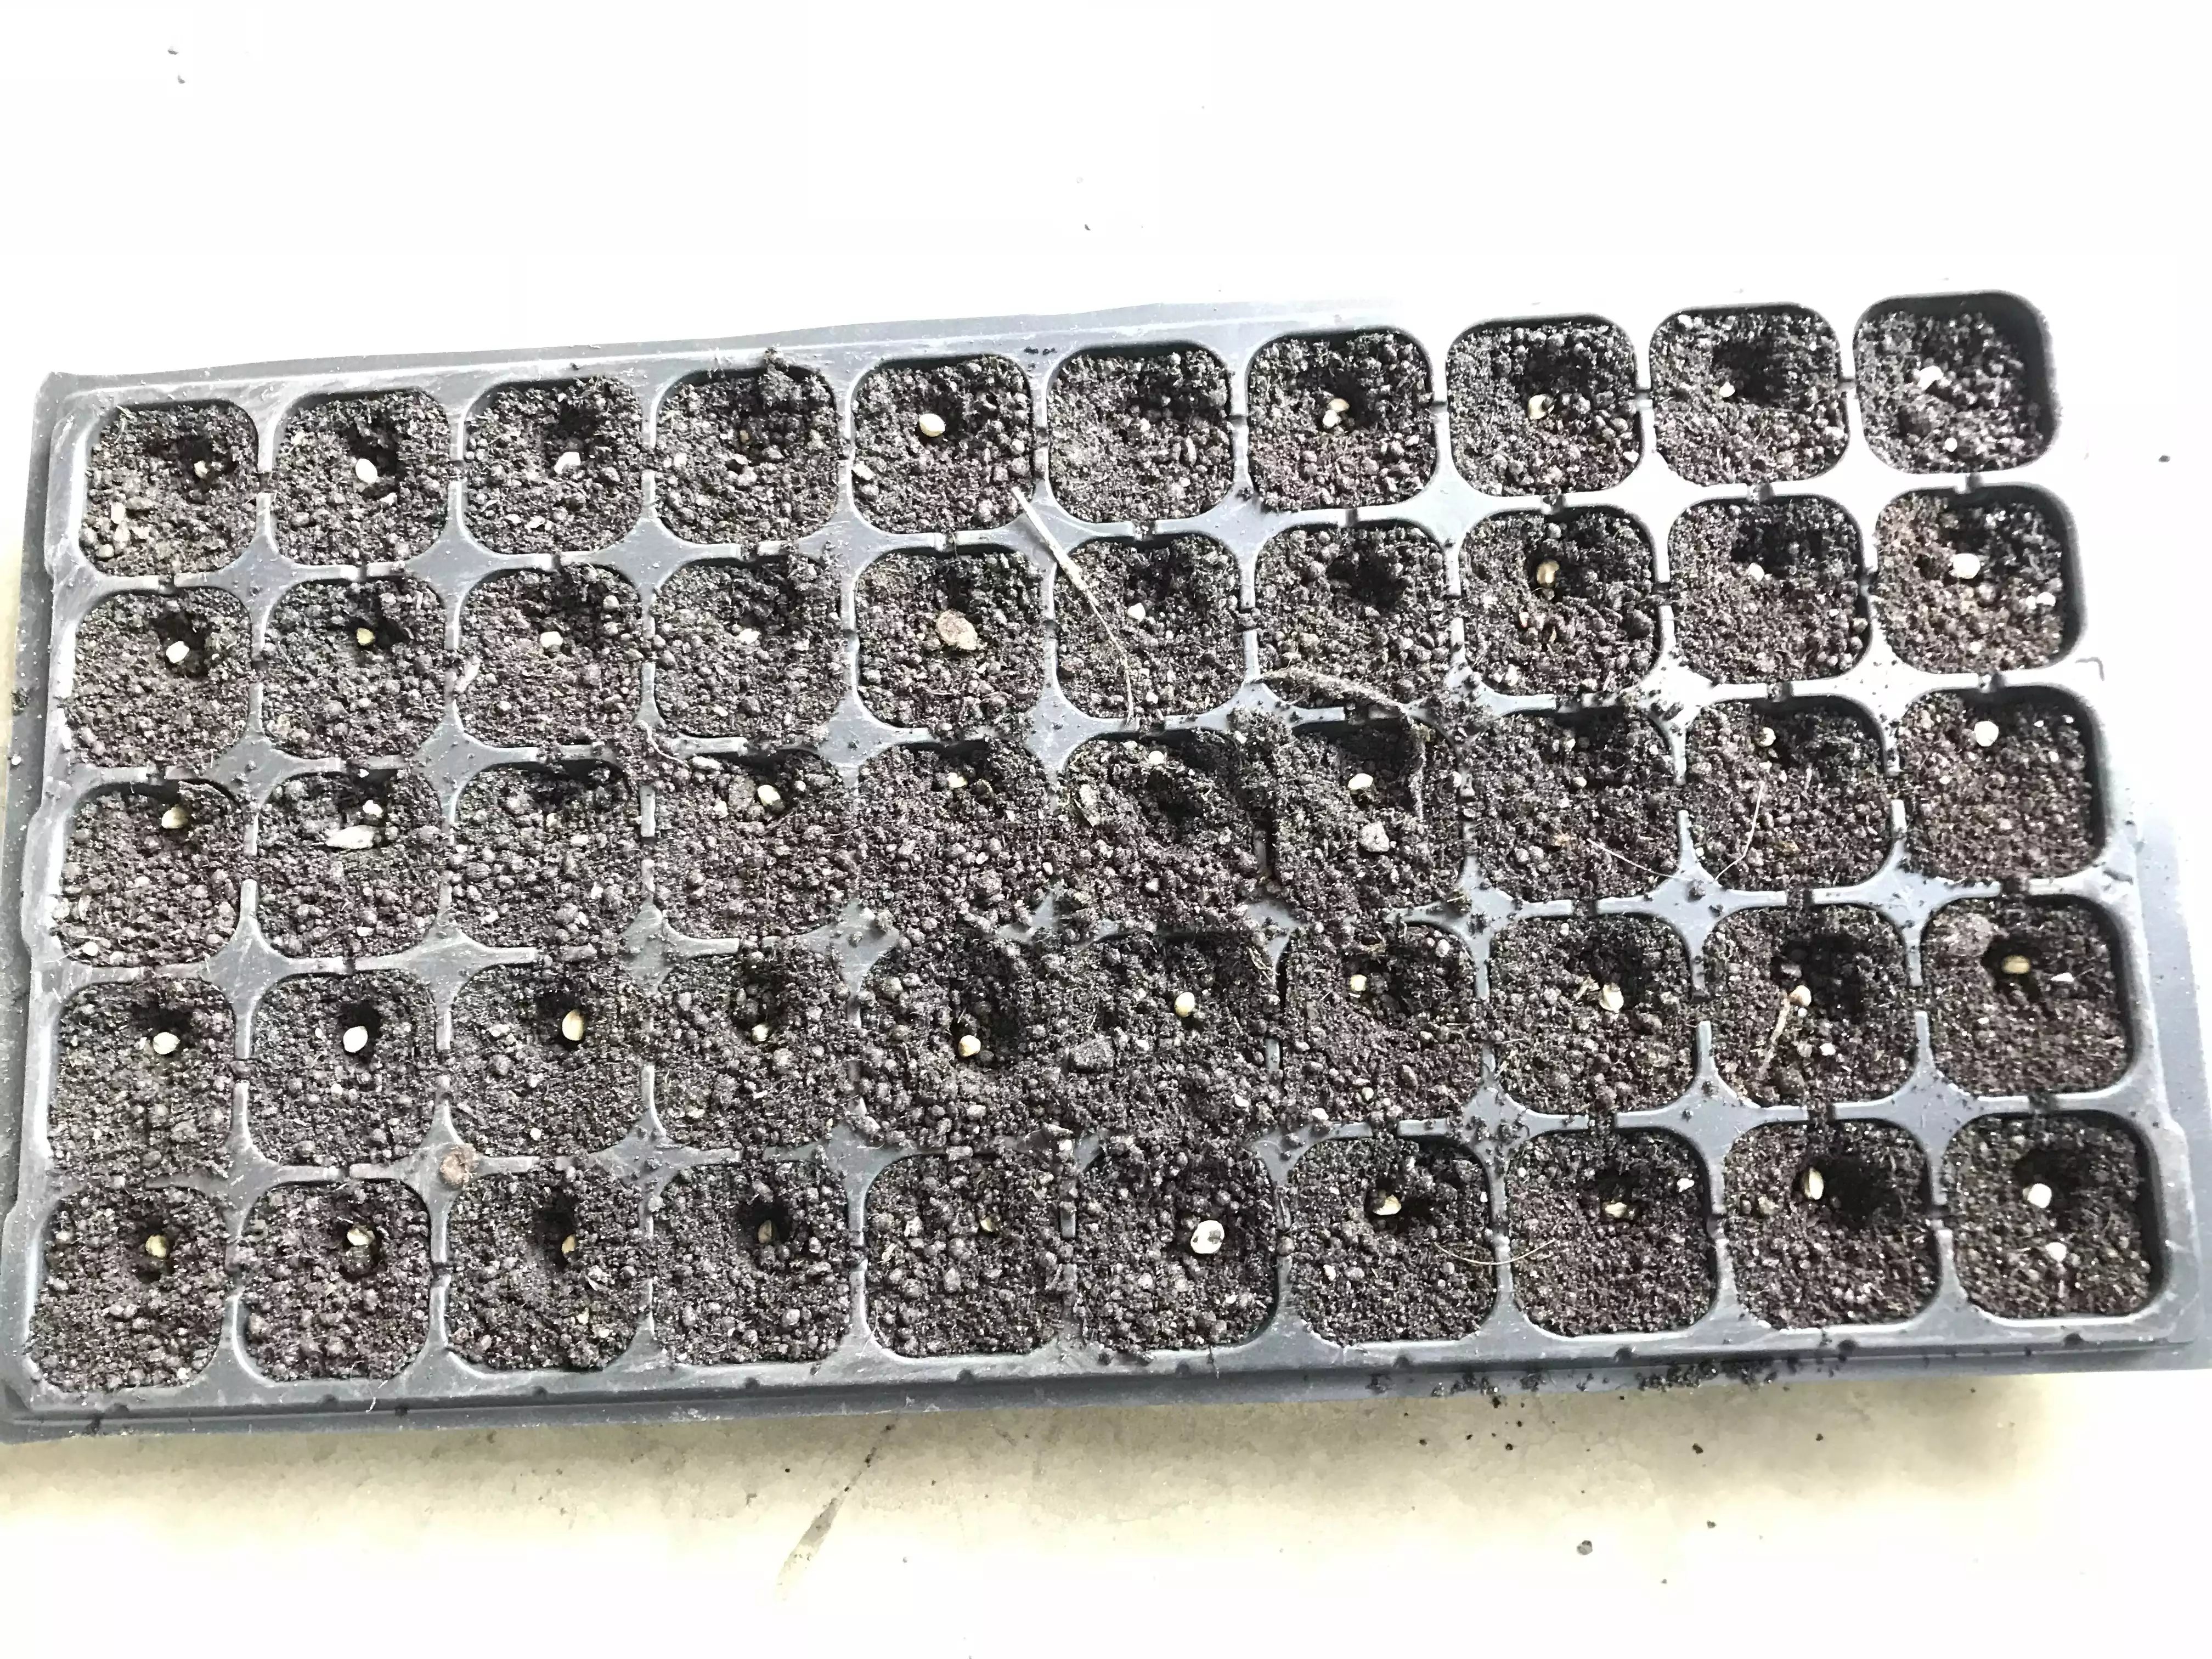 Seedling trays